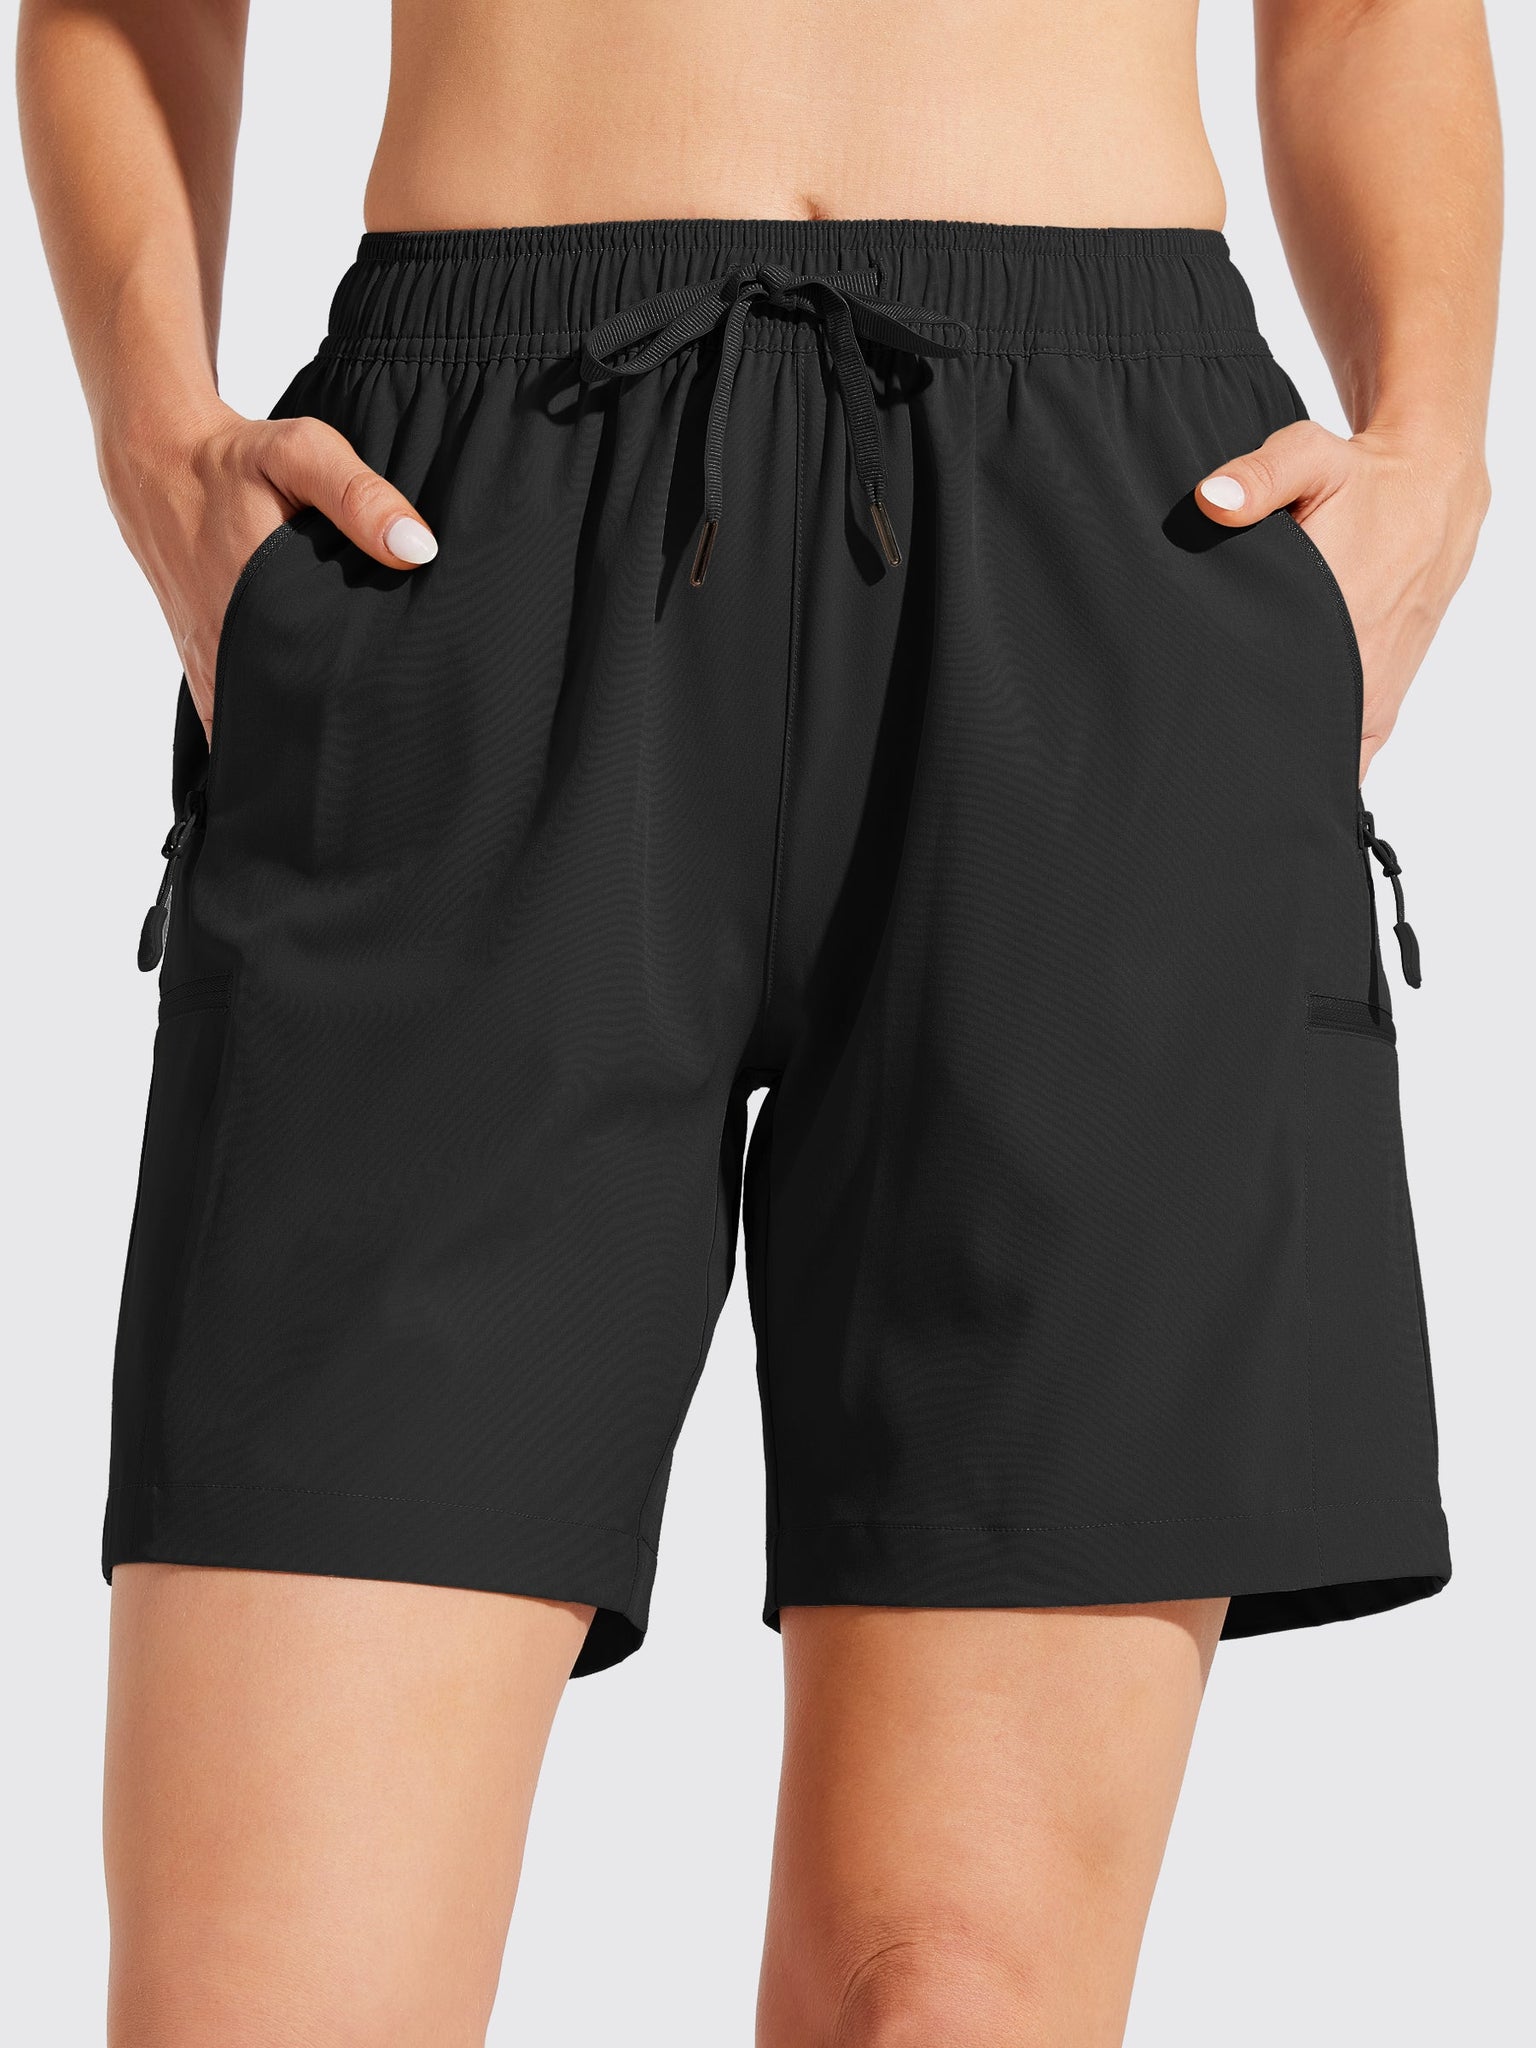 Women's Hiking Athletic Shorts_Black4